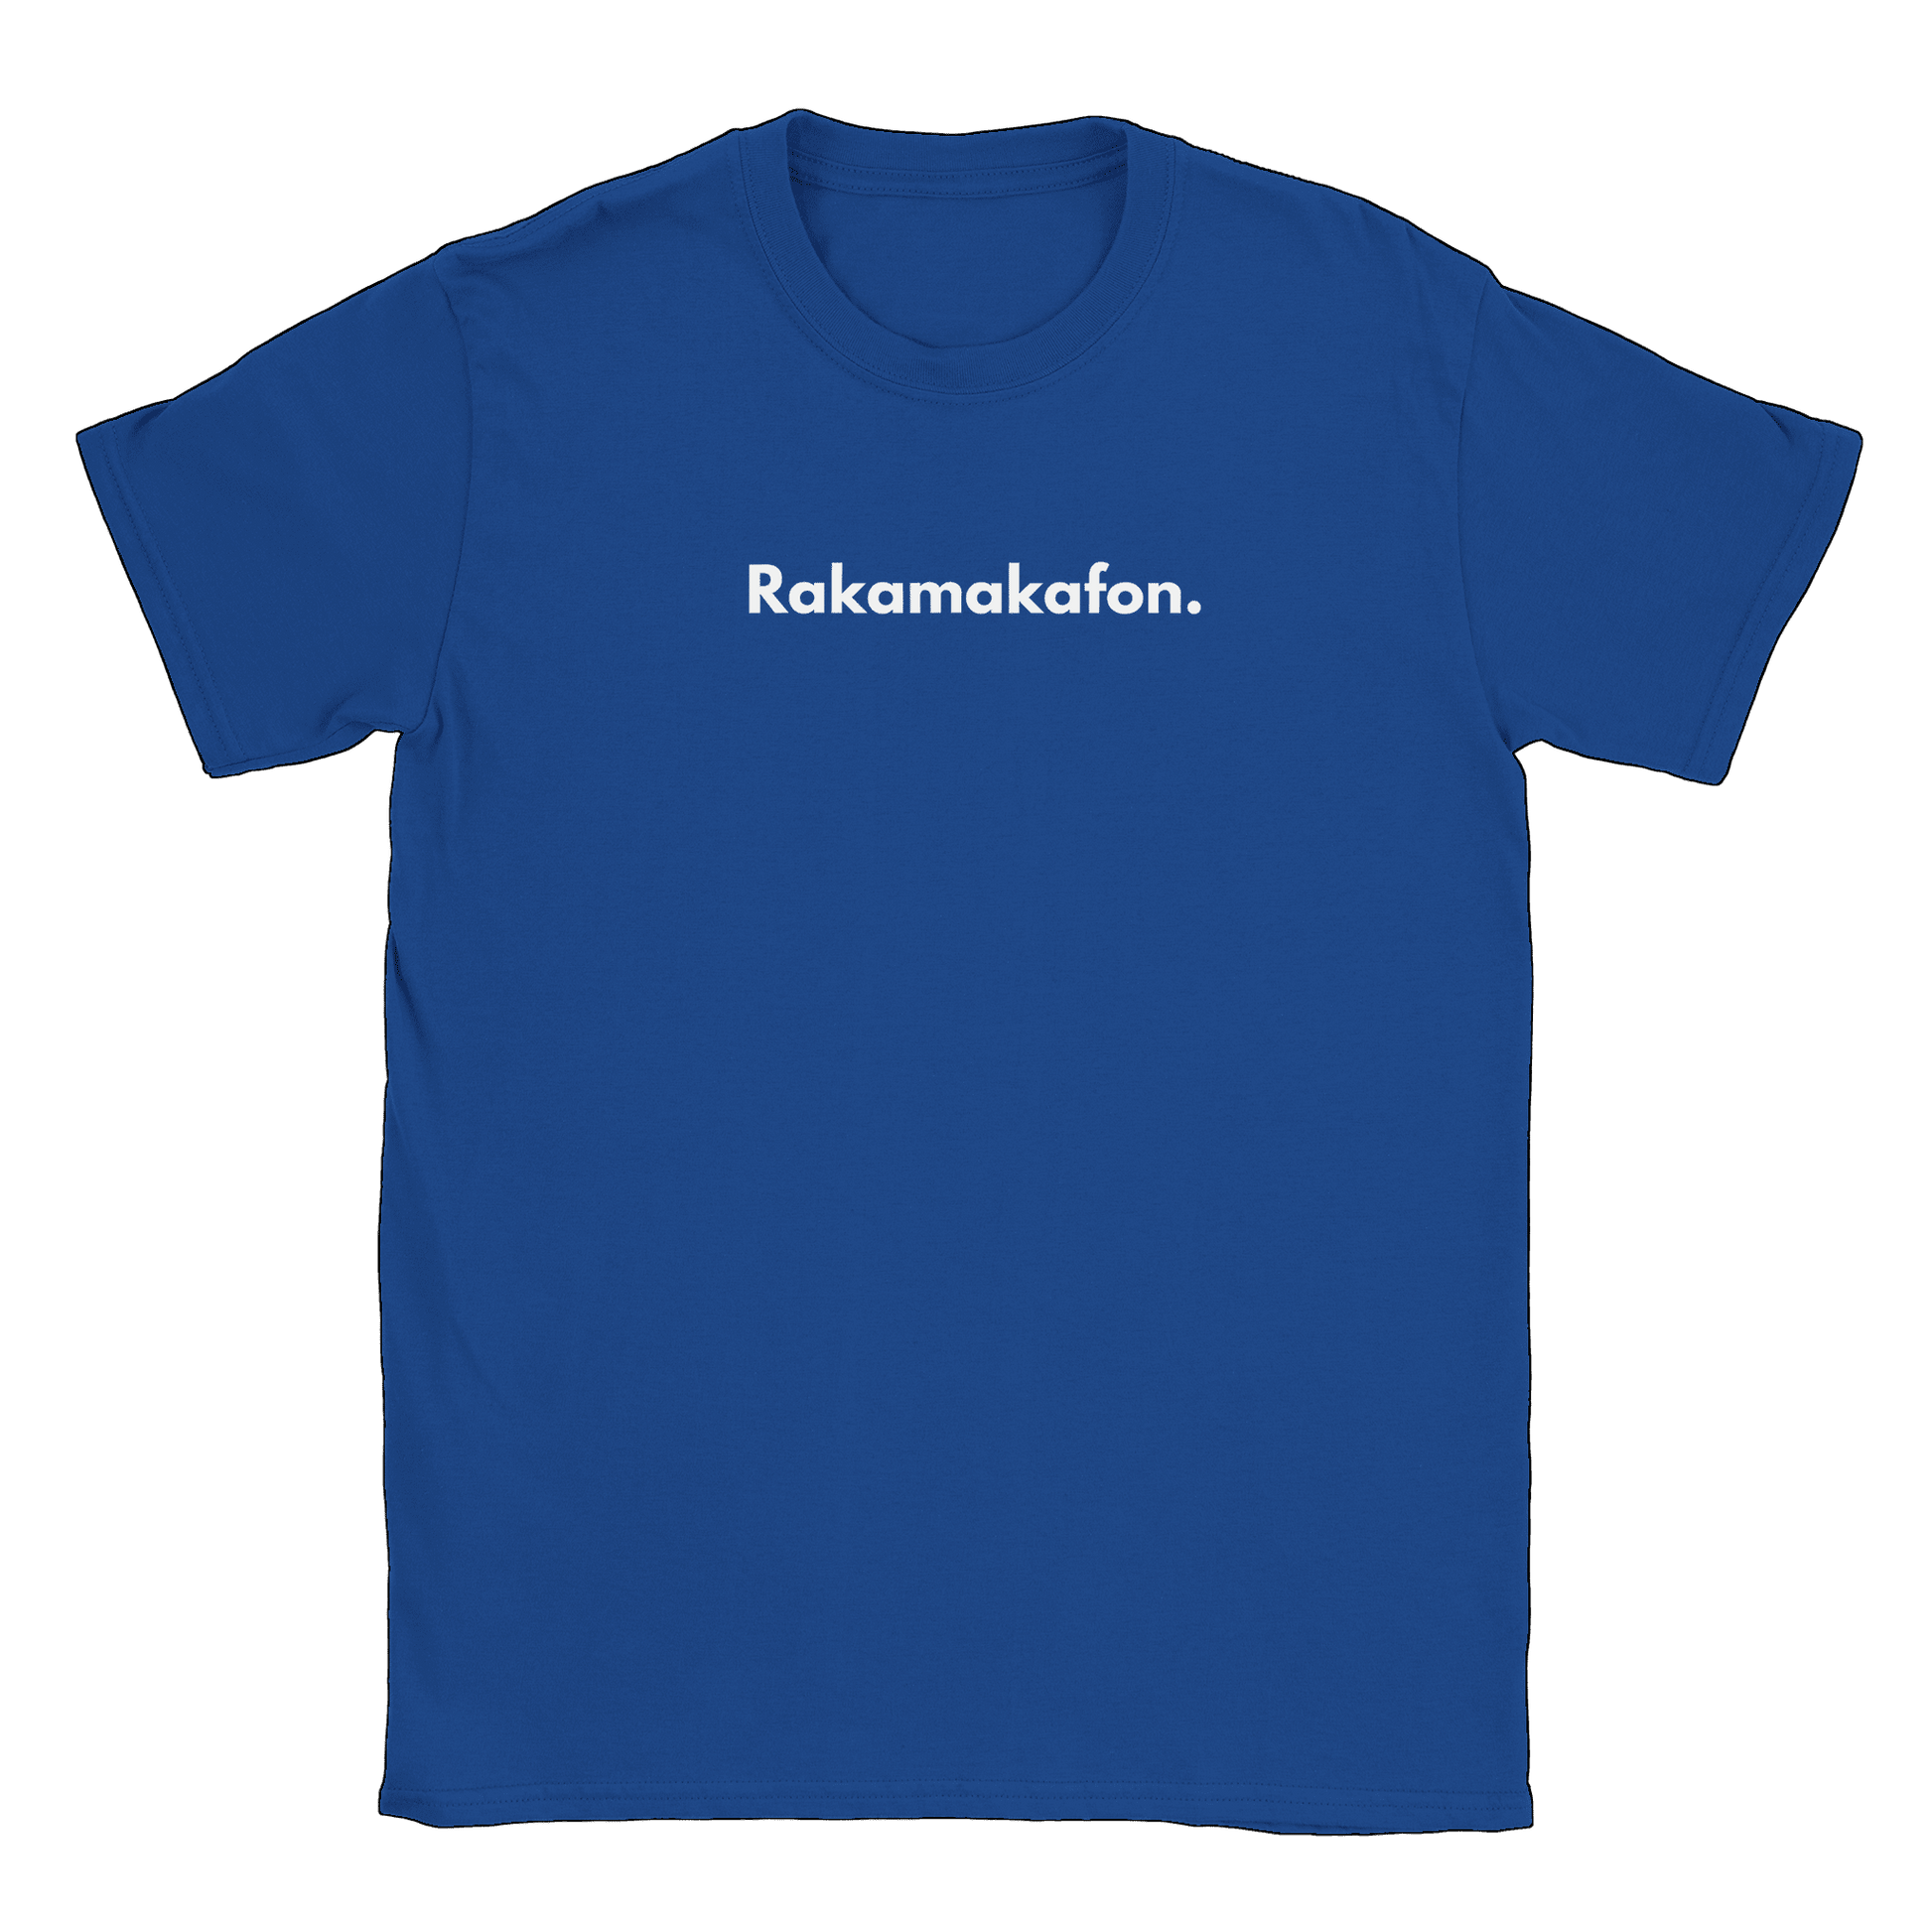 Rakamakafon - T-shirt Royal